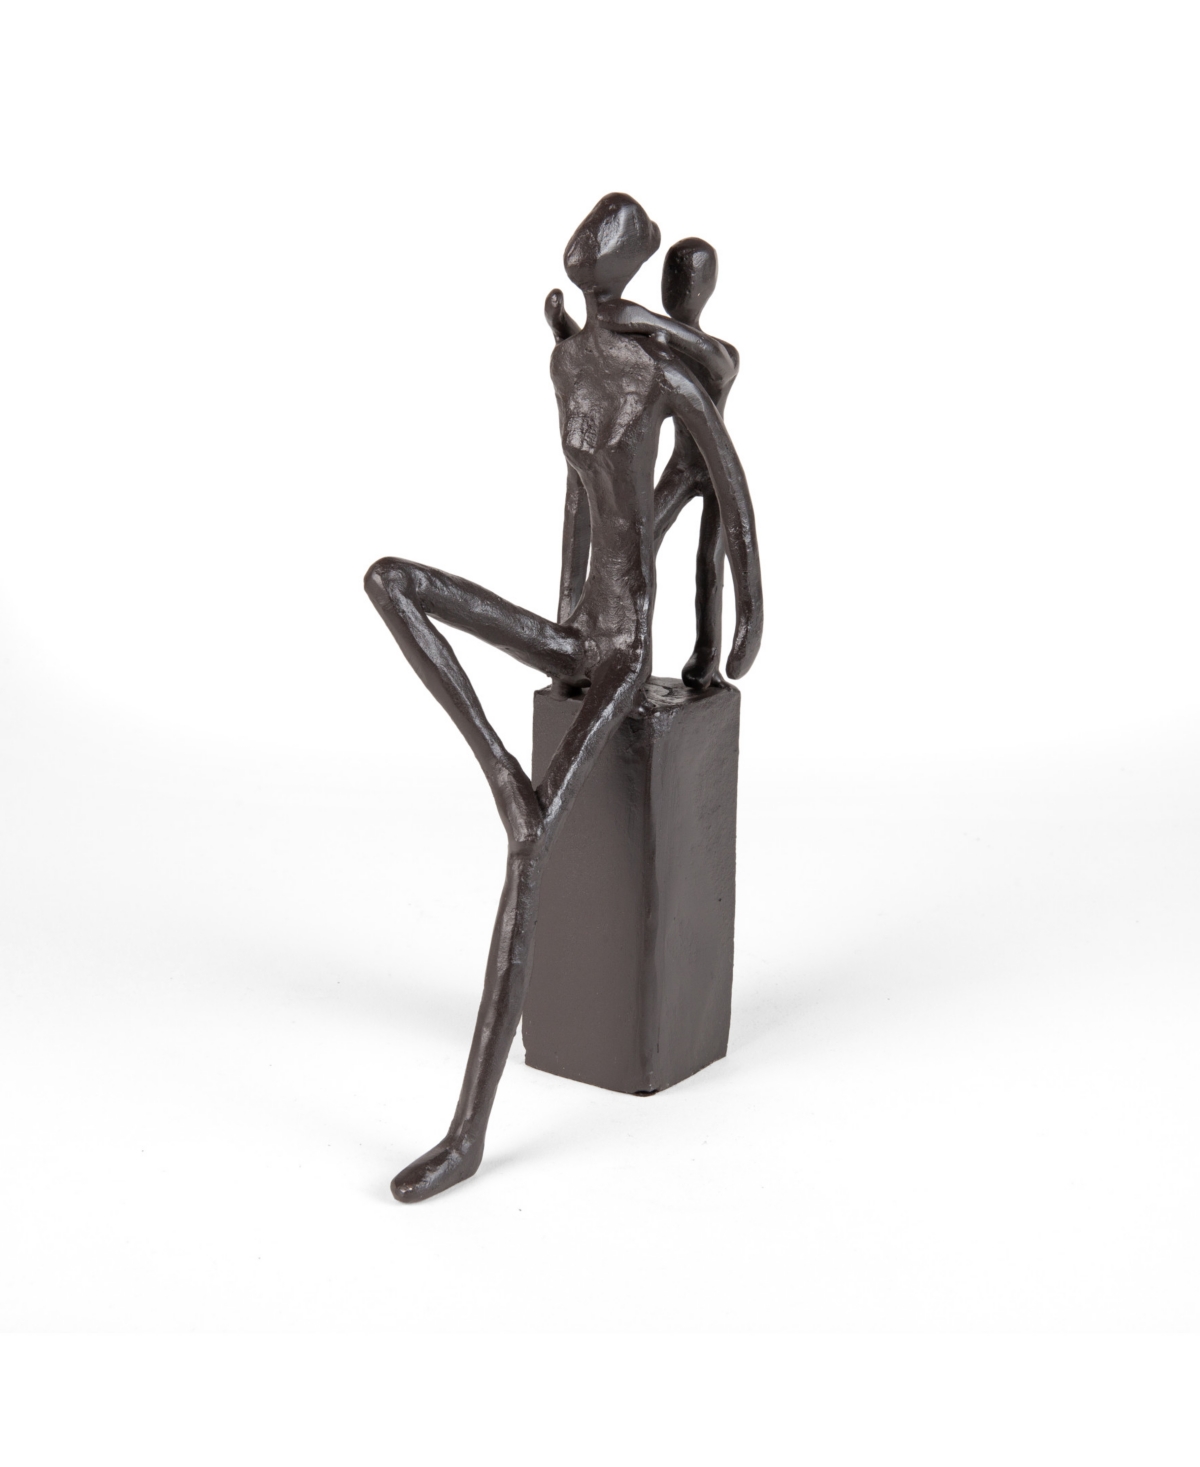 Danya B Playfulness Mother And Child Cast Iron Sculpture In Dark Brown